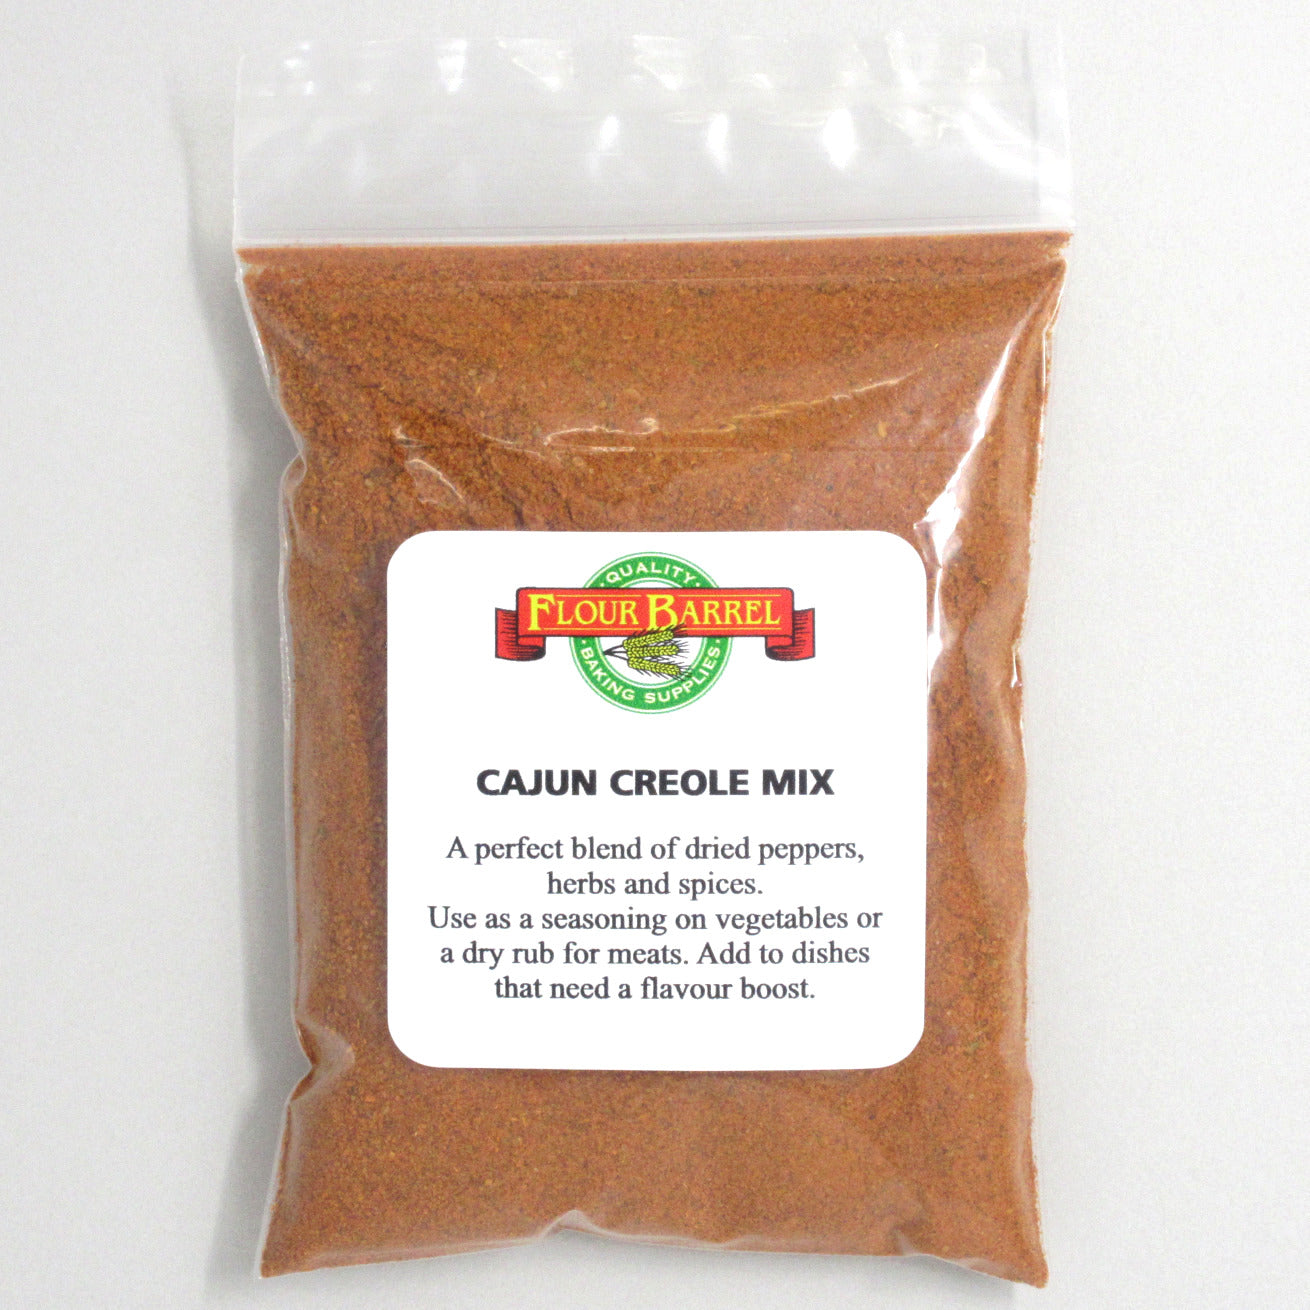 Flour Barrel product image - Cajun Creole Mix